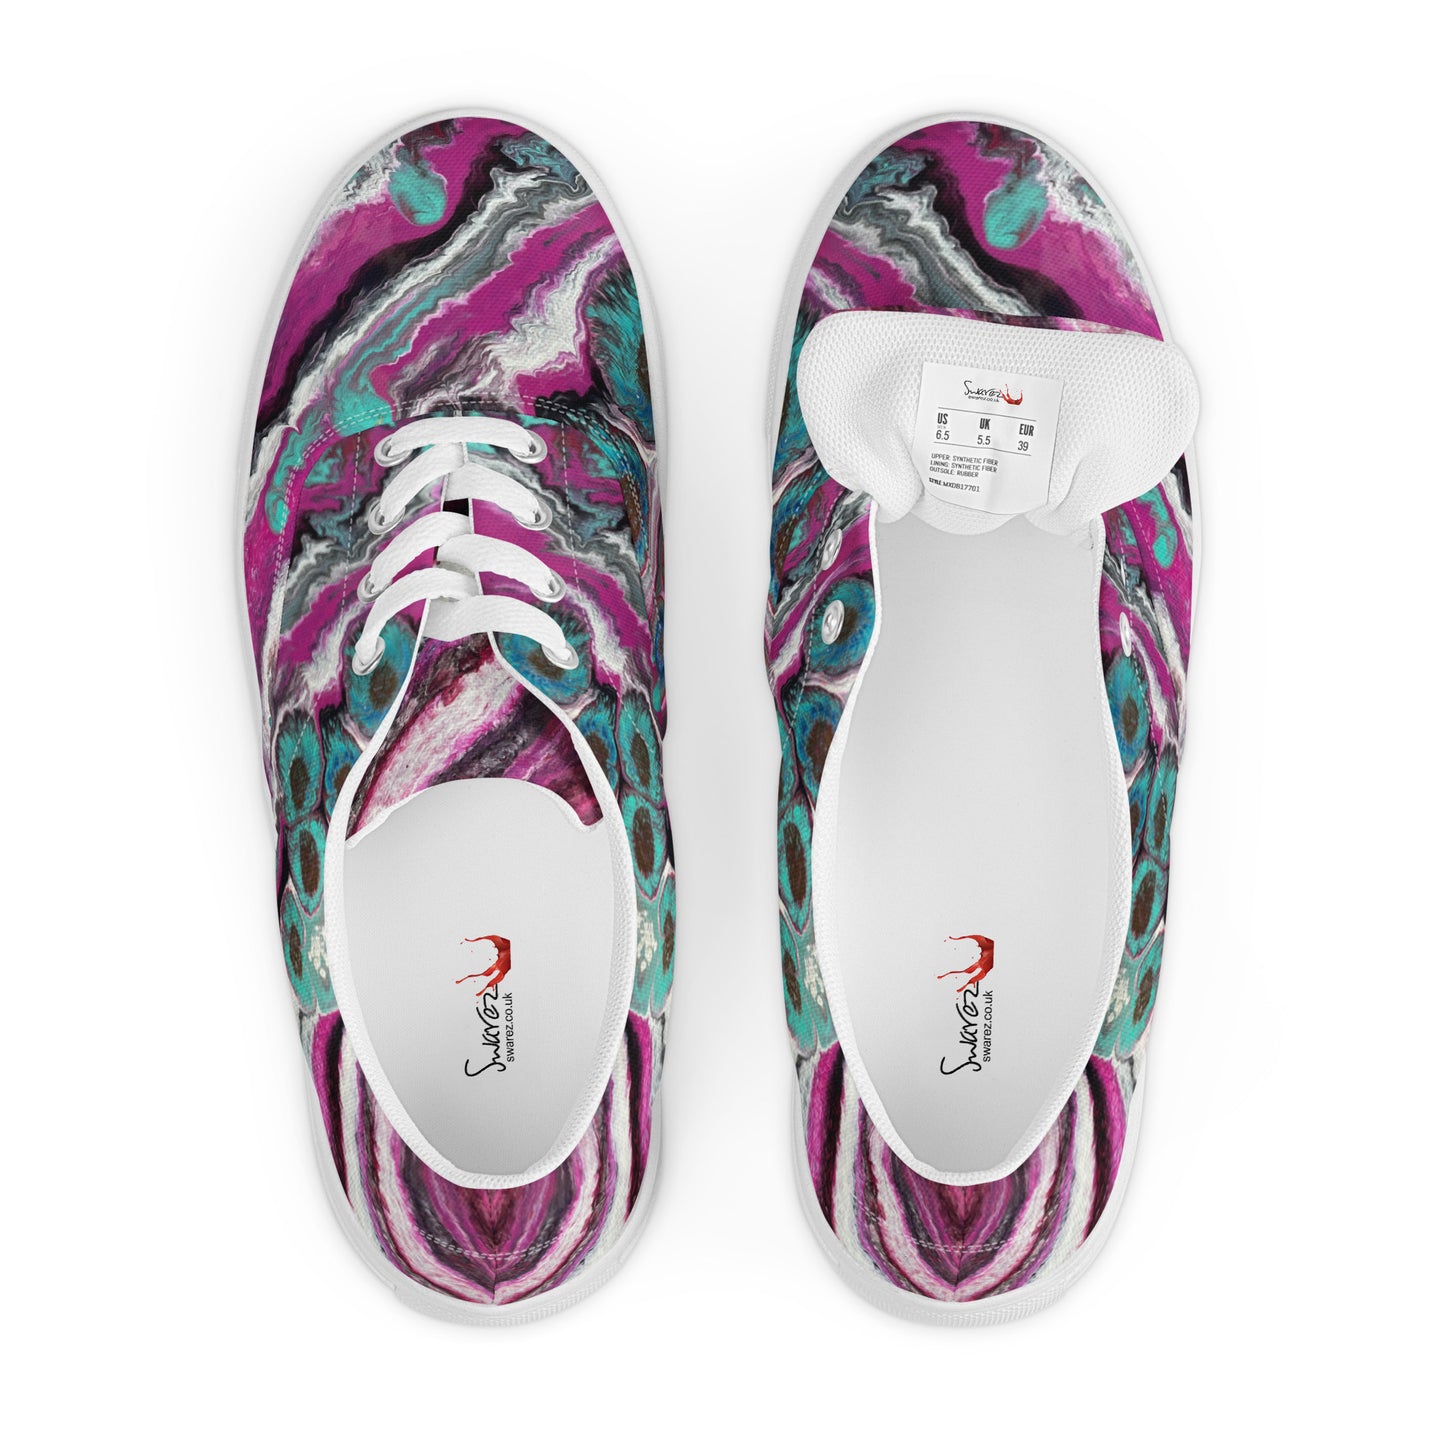 Women’s lace-up canvas shoes - Neon Canyon design